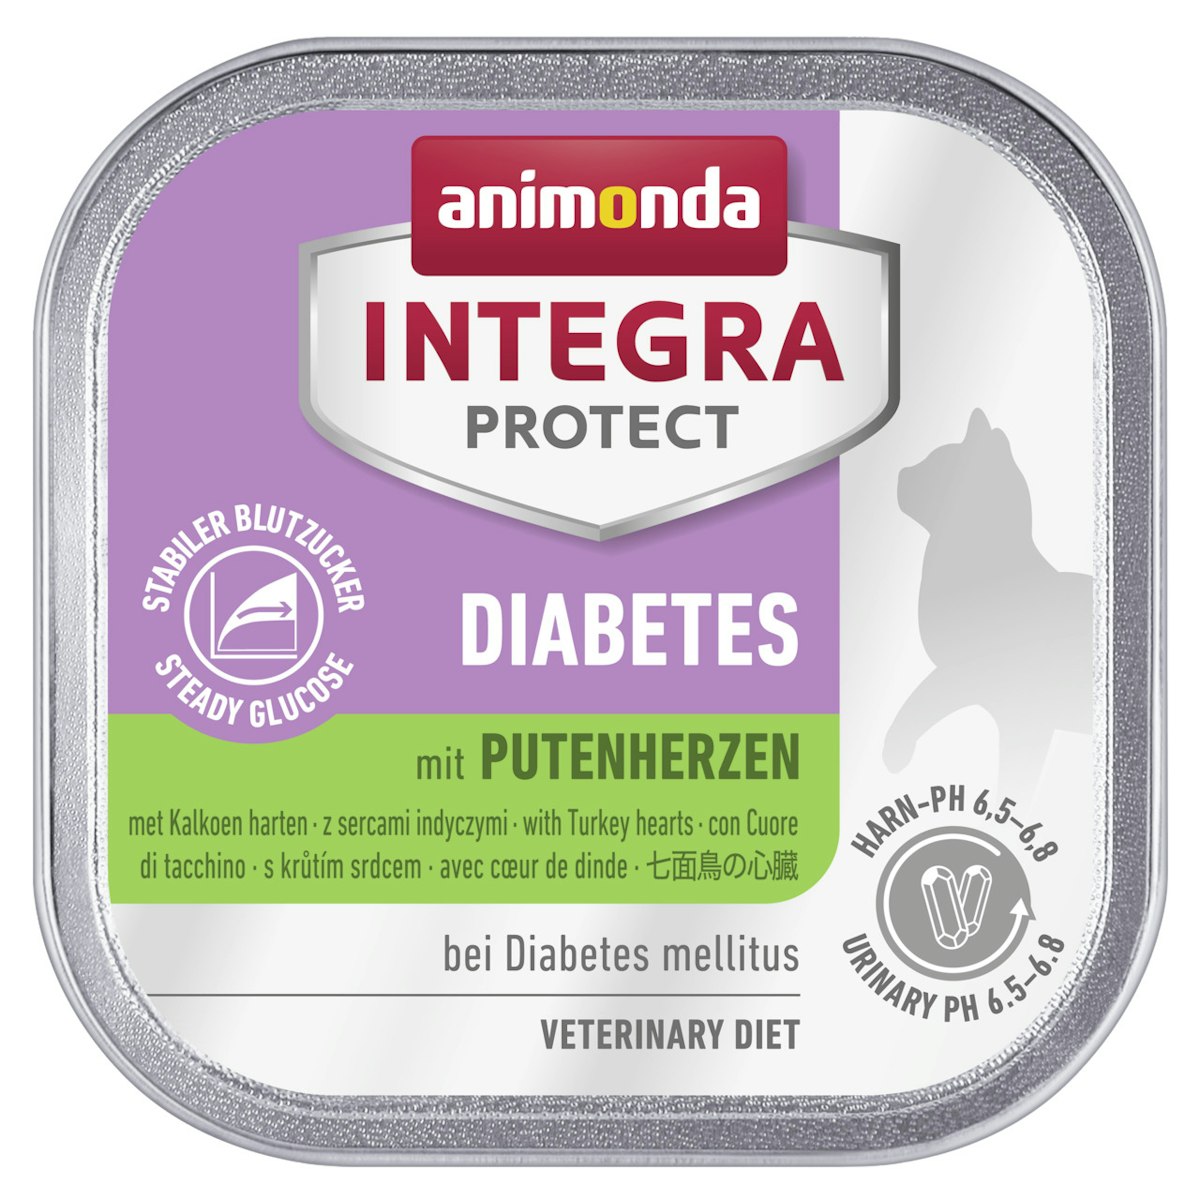 animonda Integra Protect Diabetes 100g Schale Katzennassfutter Sparpaket 32 x 100 Gramm Putenherzen